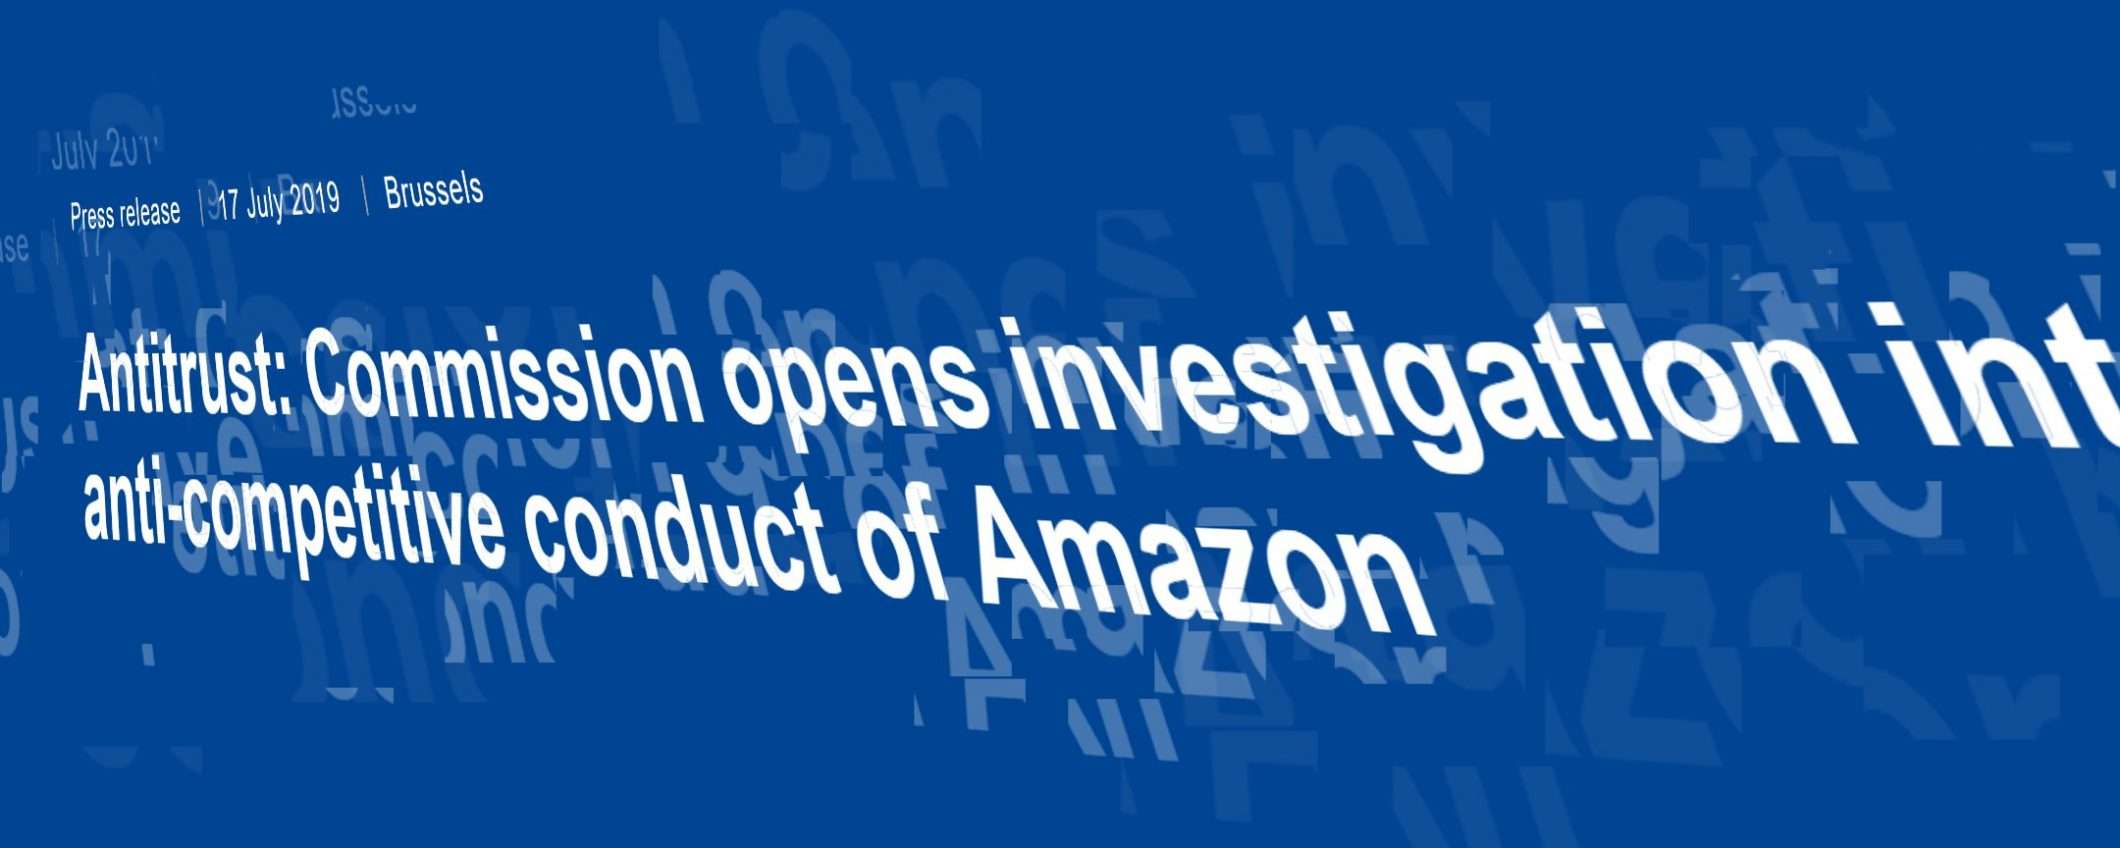 Amazon nel mirino dell'Antitrust europea